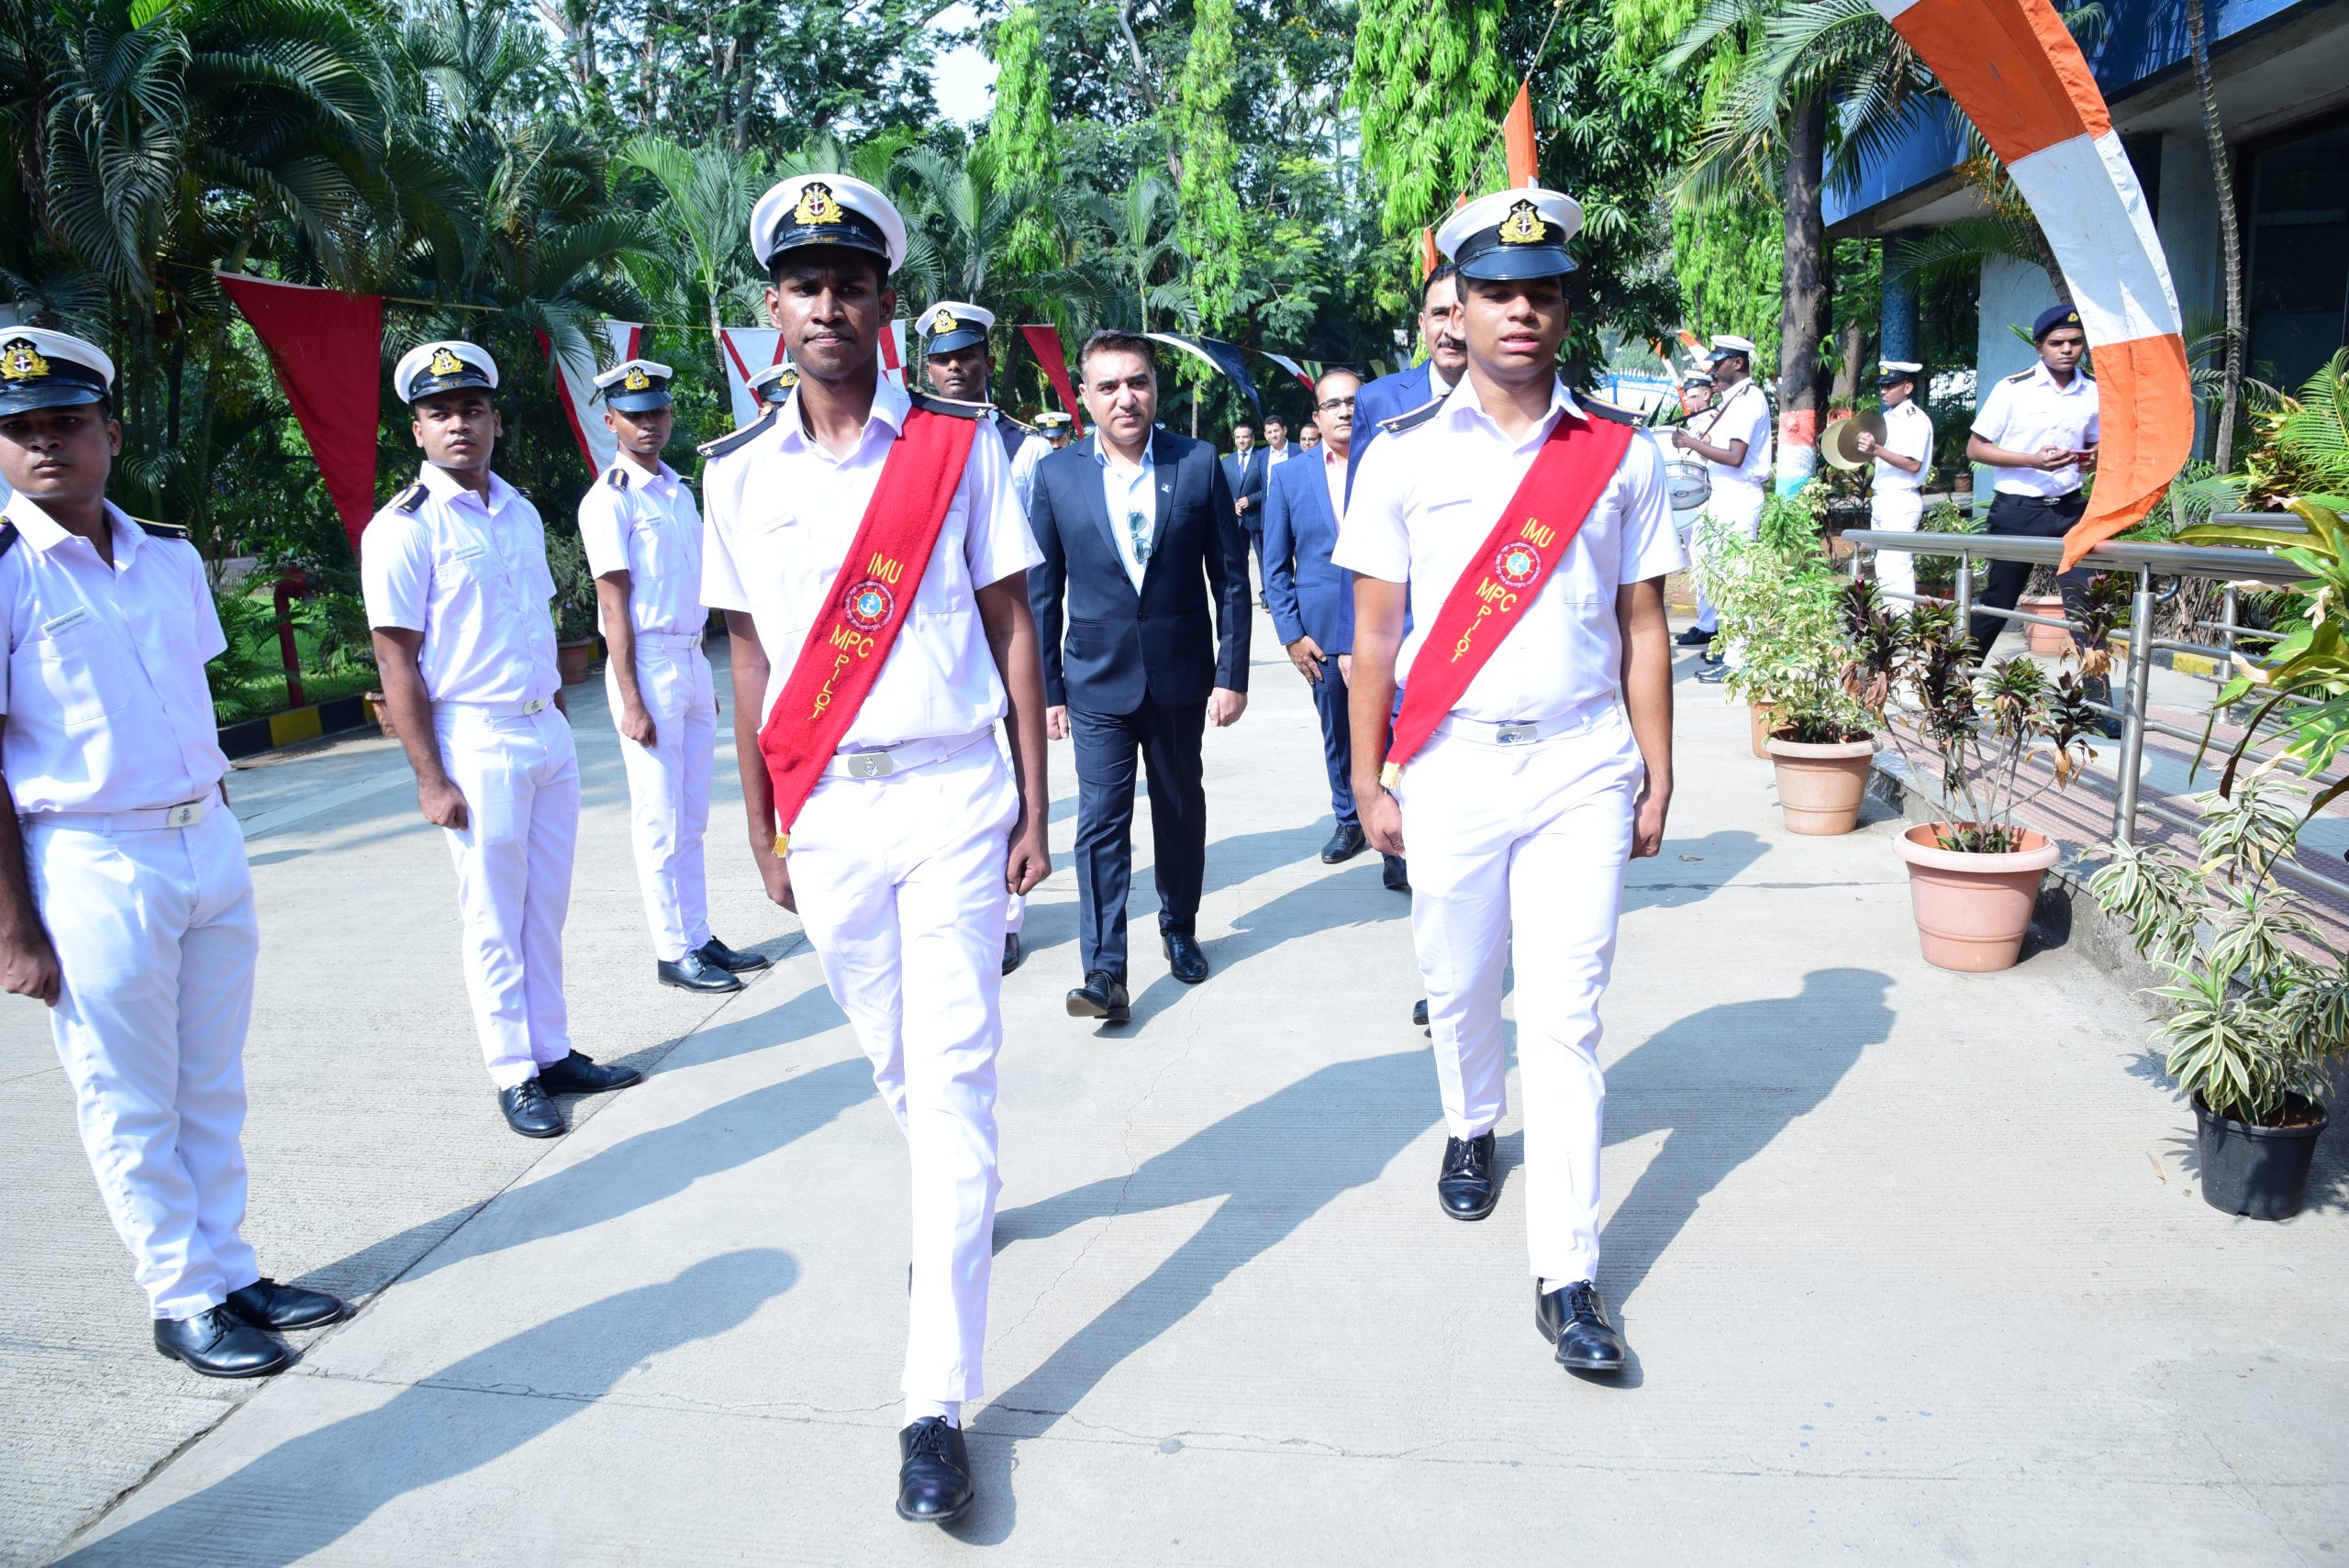 Guard of Honor Parade at the Indian Maritime University